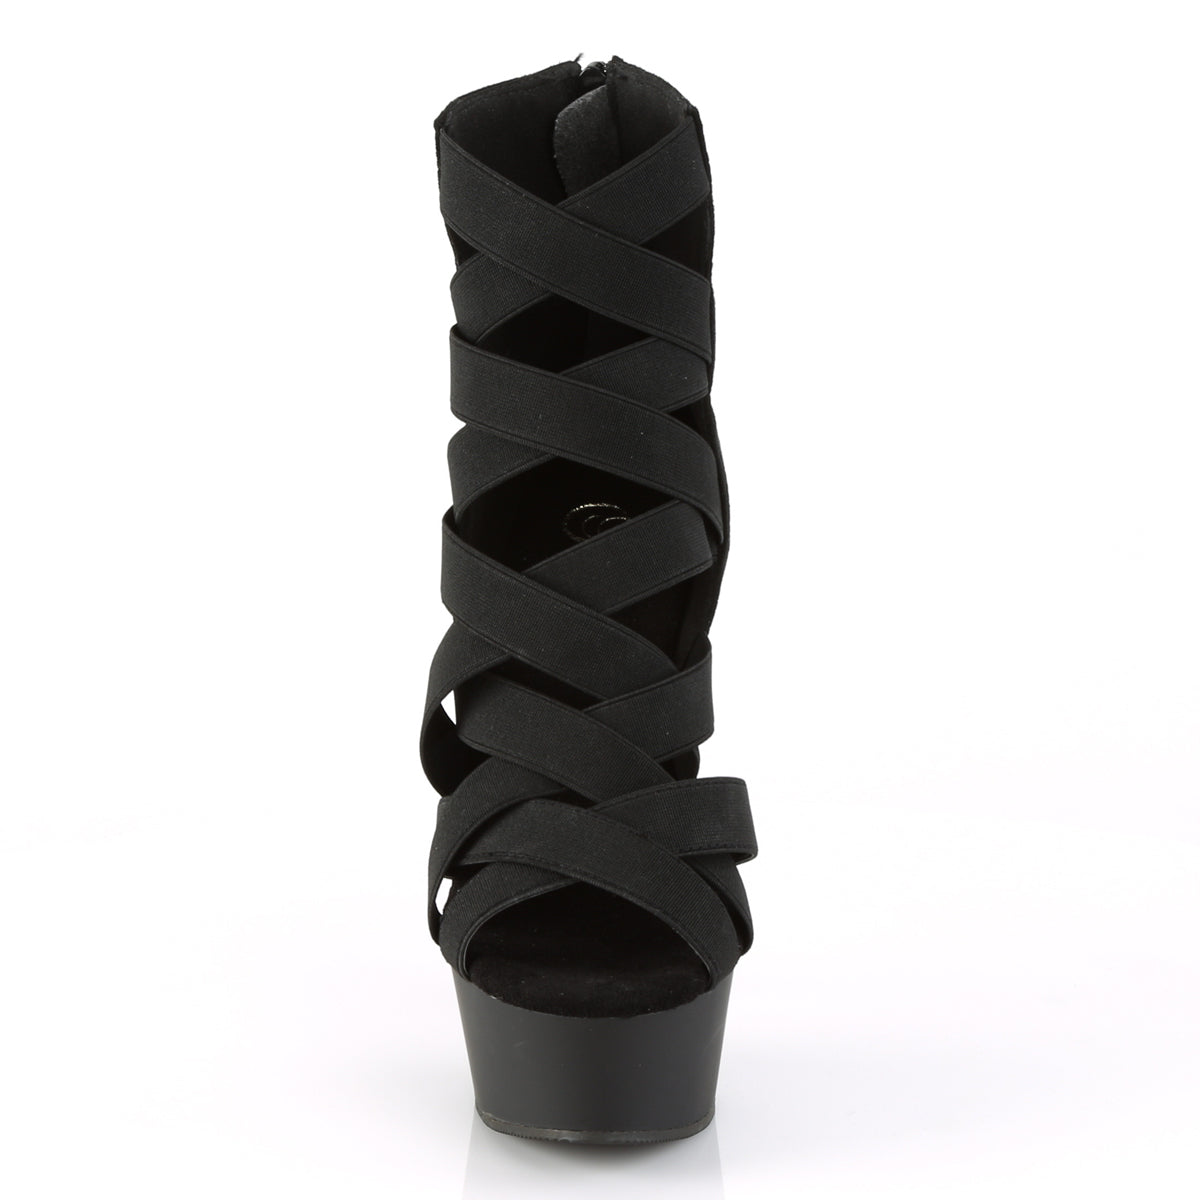 DELIGHT-600-24 Pleaser 6" Heel Black Pole Dancing Platforms-Pleaser- Sexy Shoes Alternative Footwear